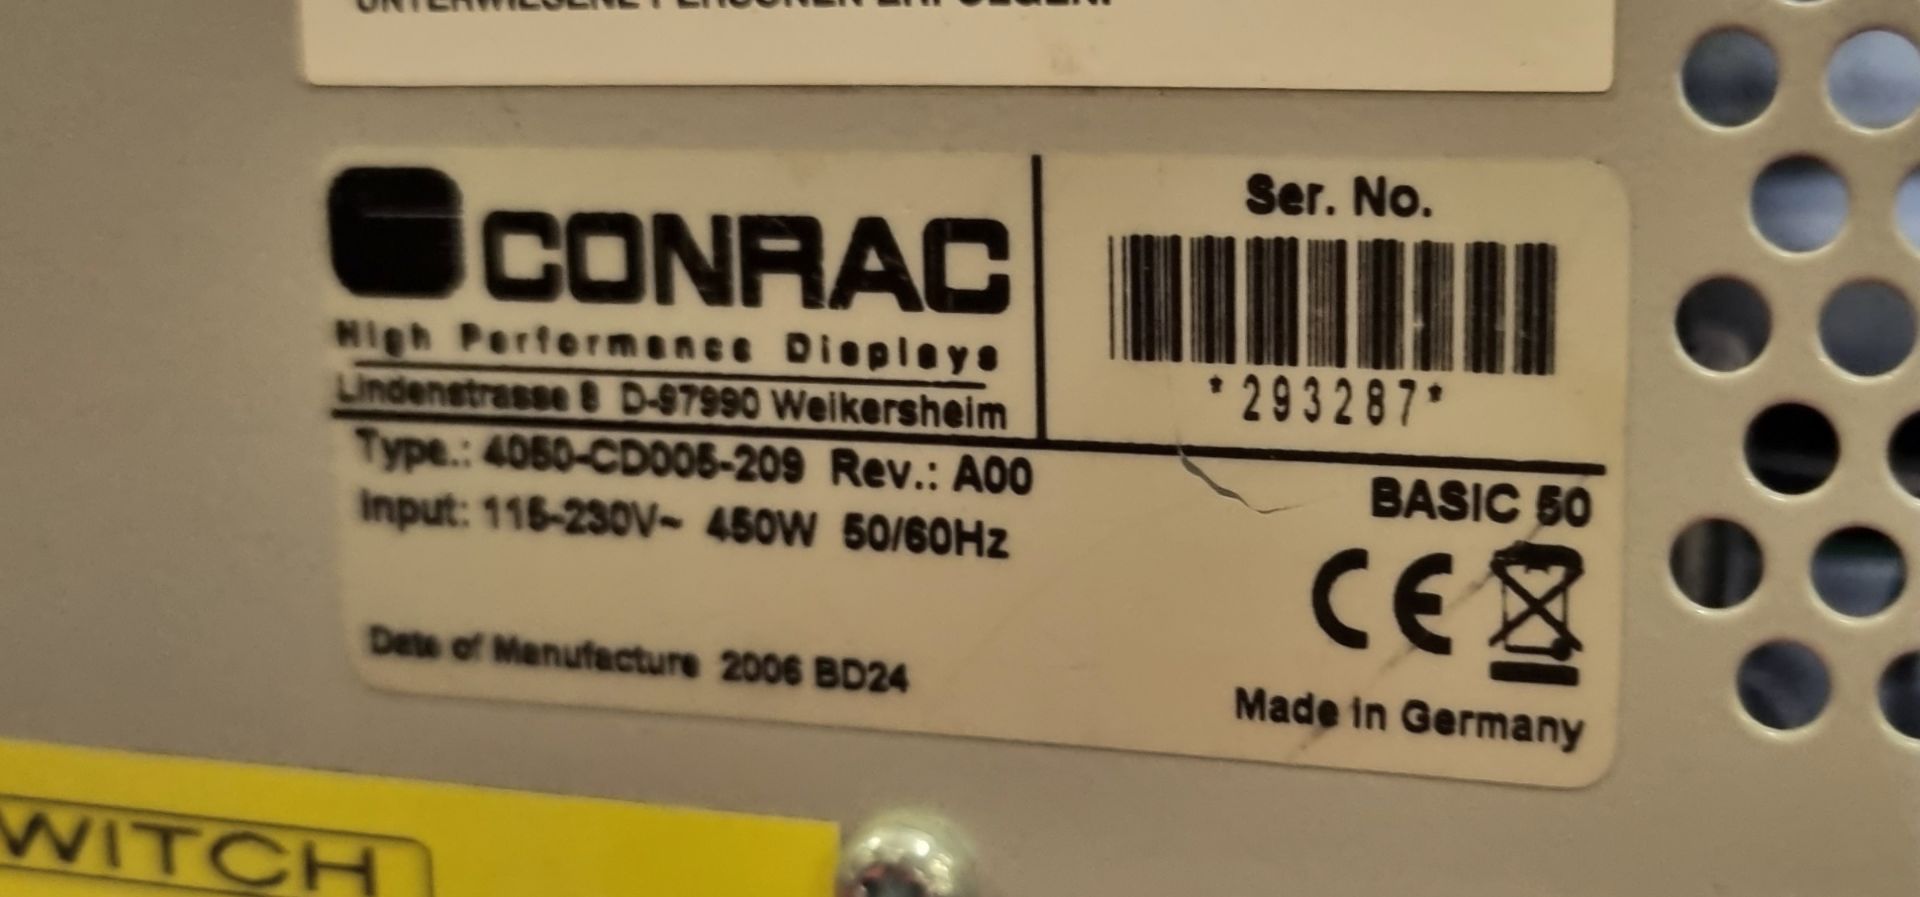 Conrac 4050-CD005-209 50 inch plasma TV - SCRATCH TO SCREEN - NO STAND OR REMOTE - Bild 3 aus 3